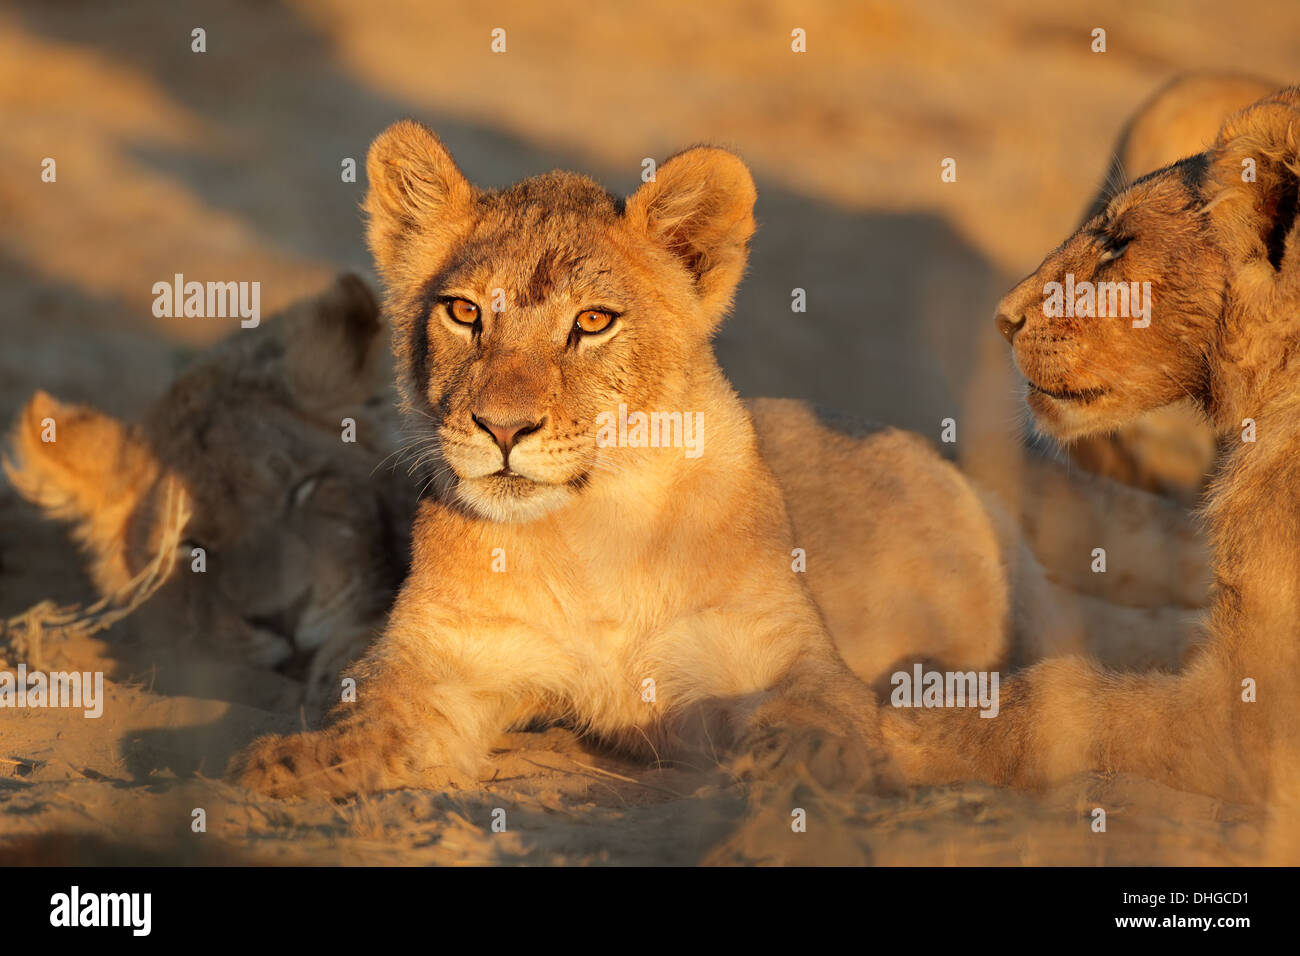 African lion (Panthera leo) in early morning light, désert du Kalahari, Afrique du Sud Banque D'Images